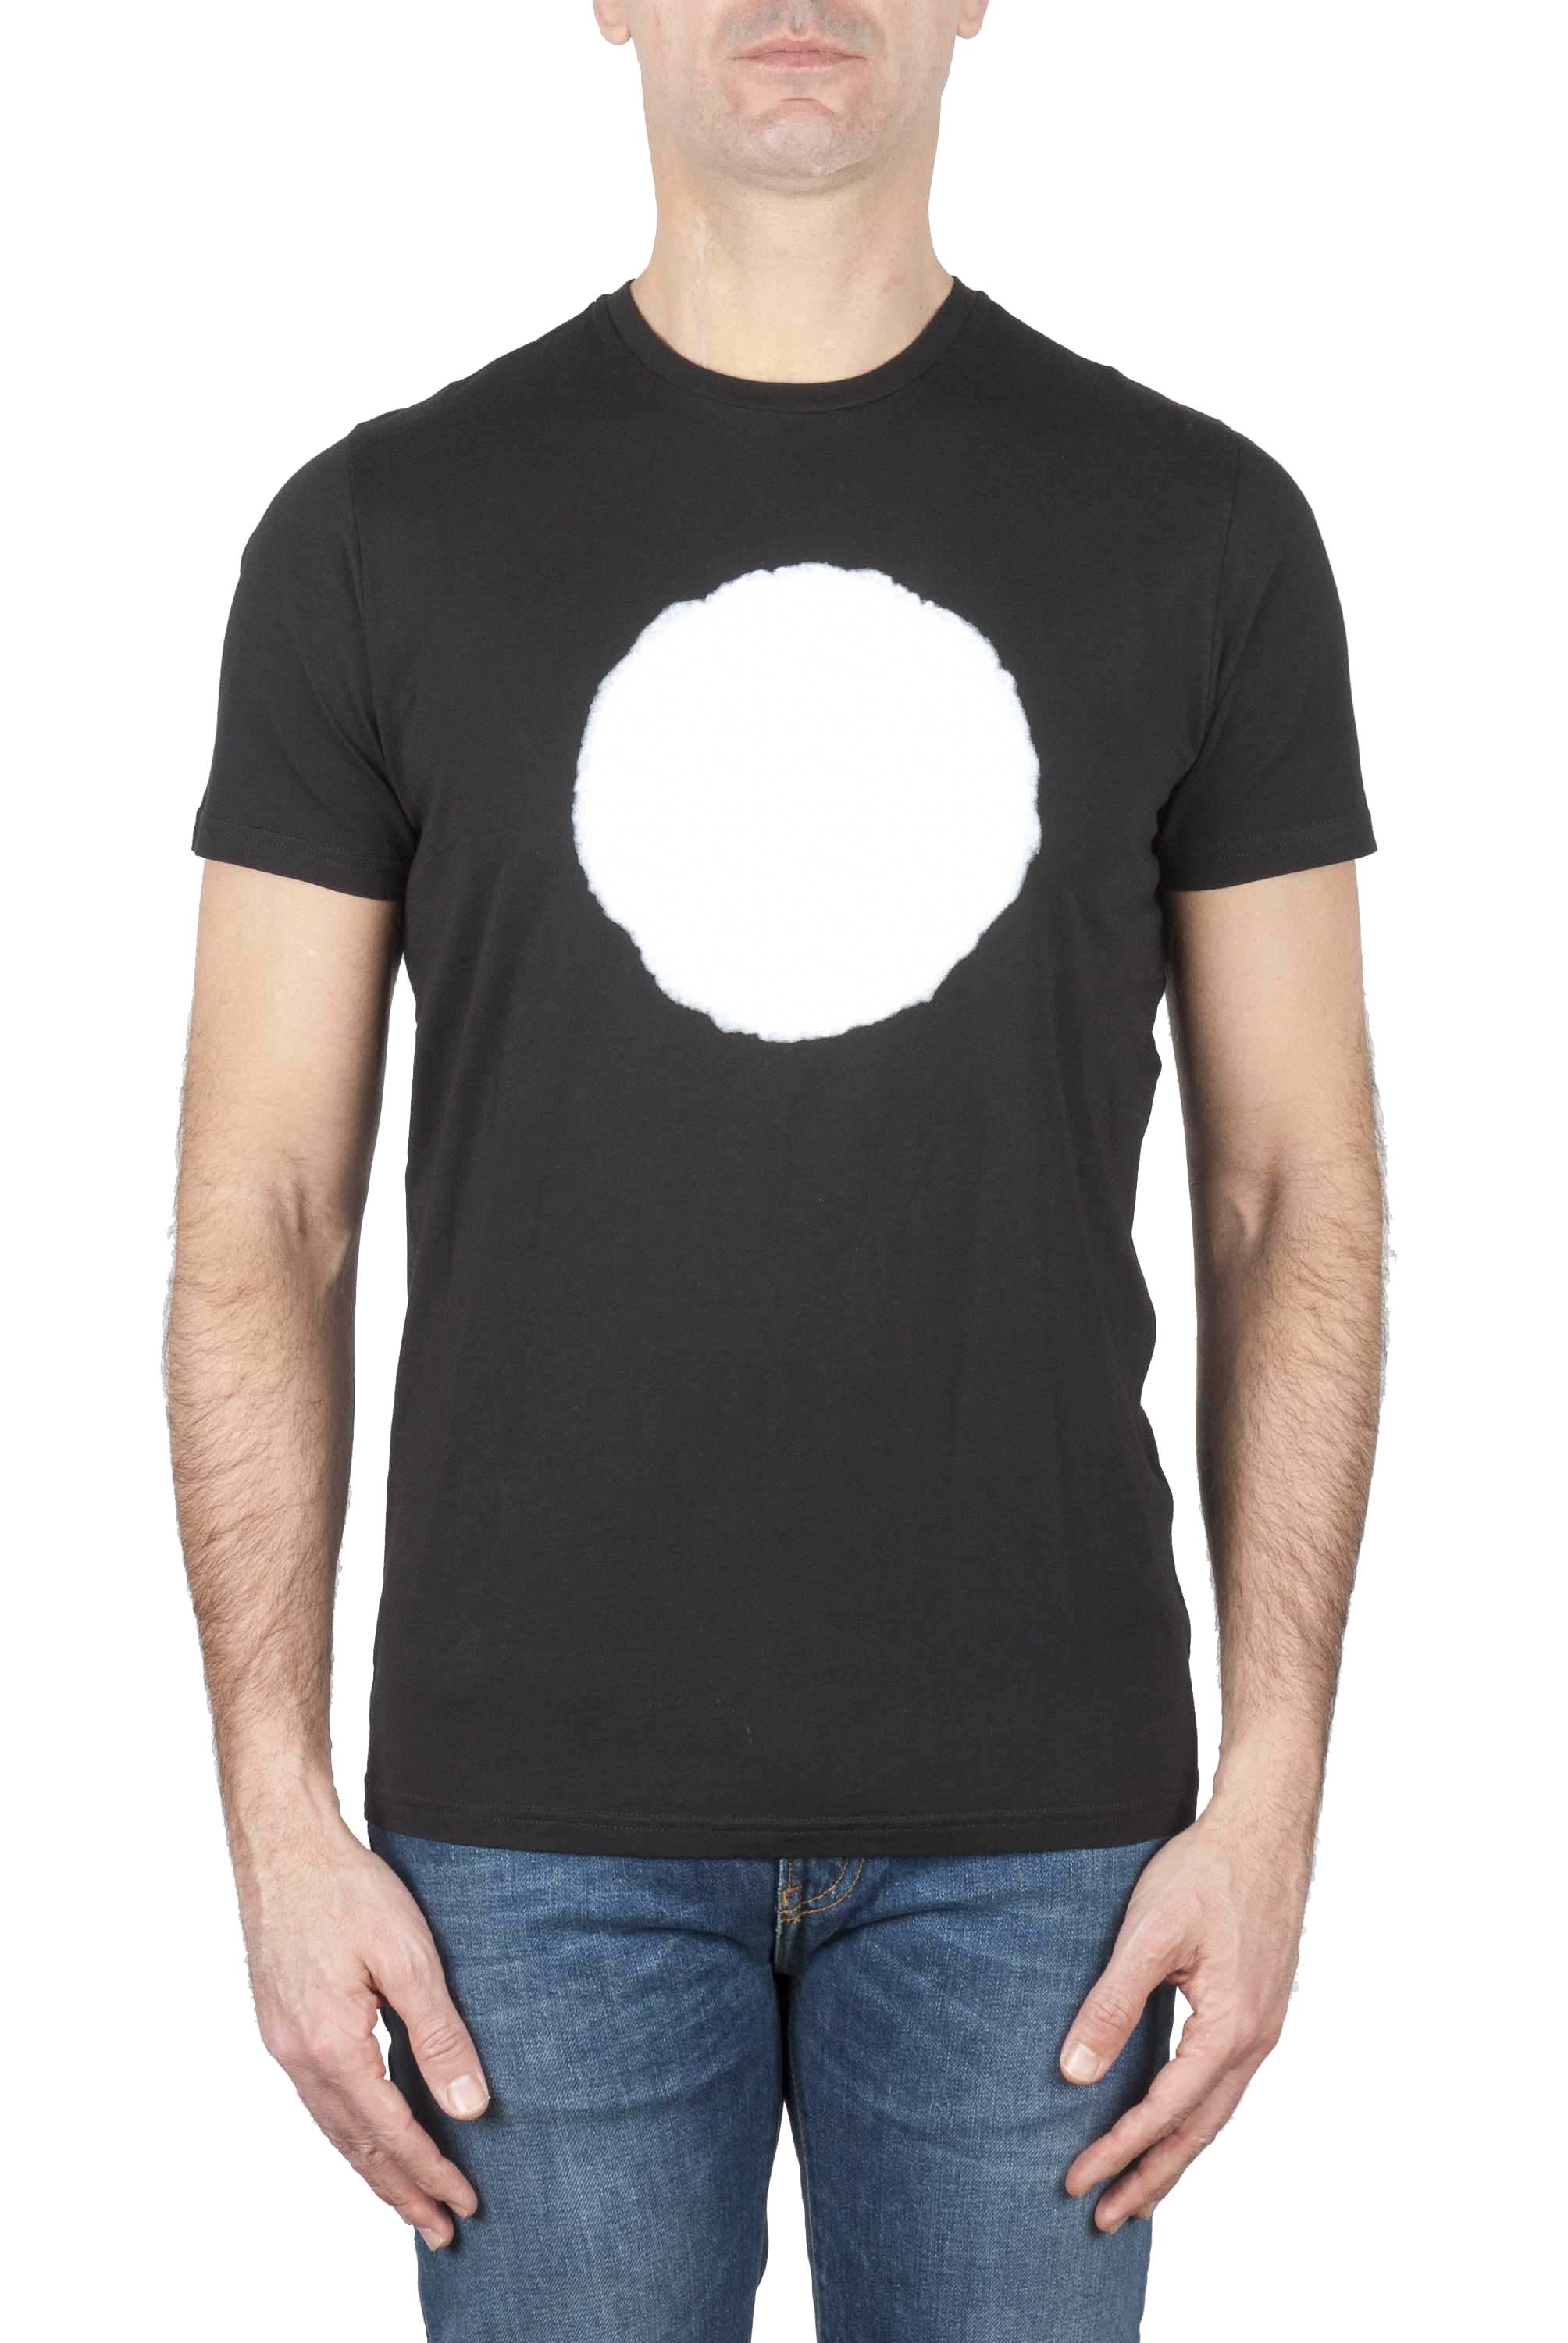 SBU 01166_19AW 白と黒のプリントされたグラフィックの古典的な半袖綿ラウンドネックtシャツ 01